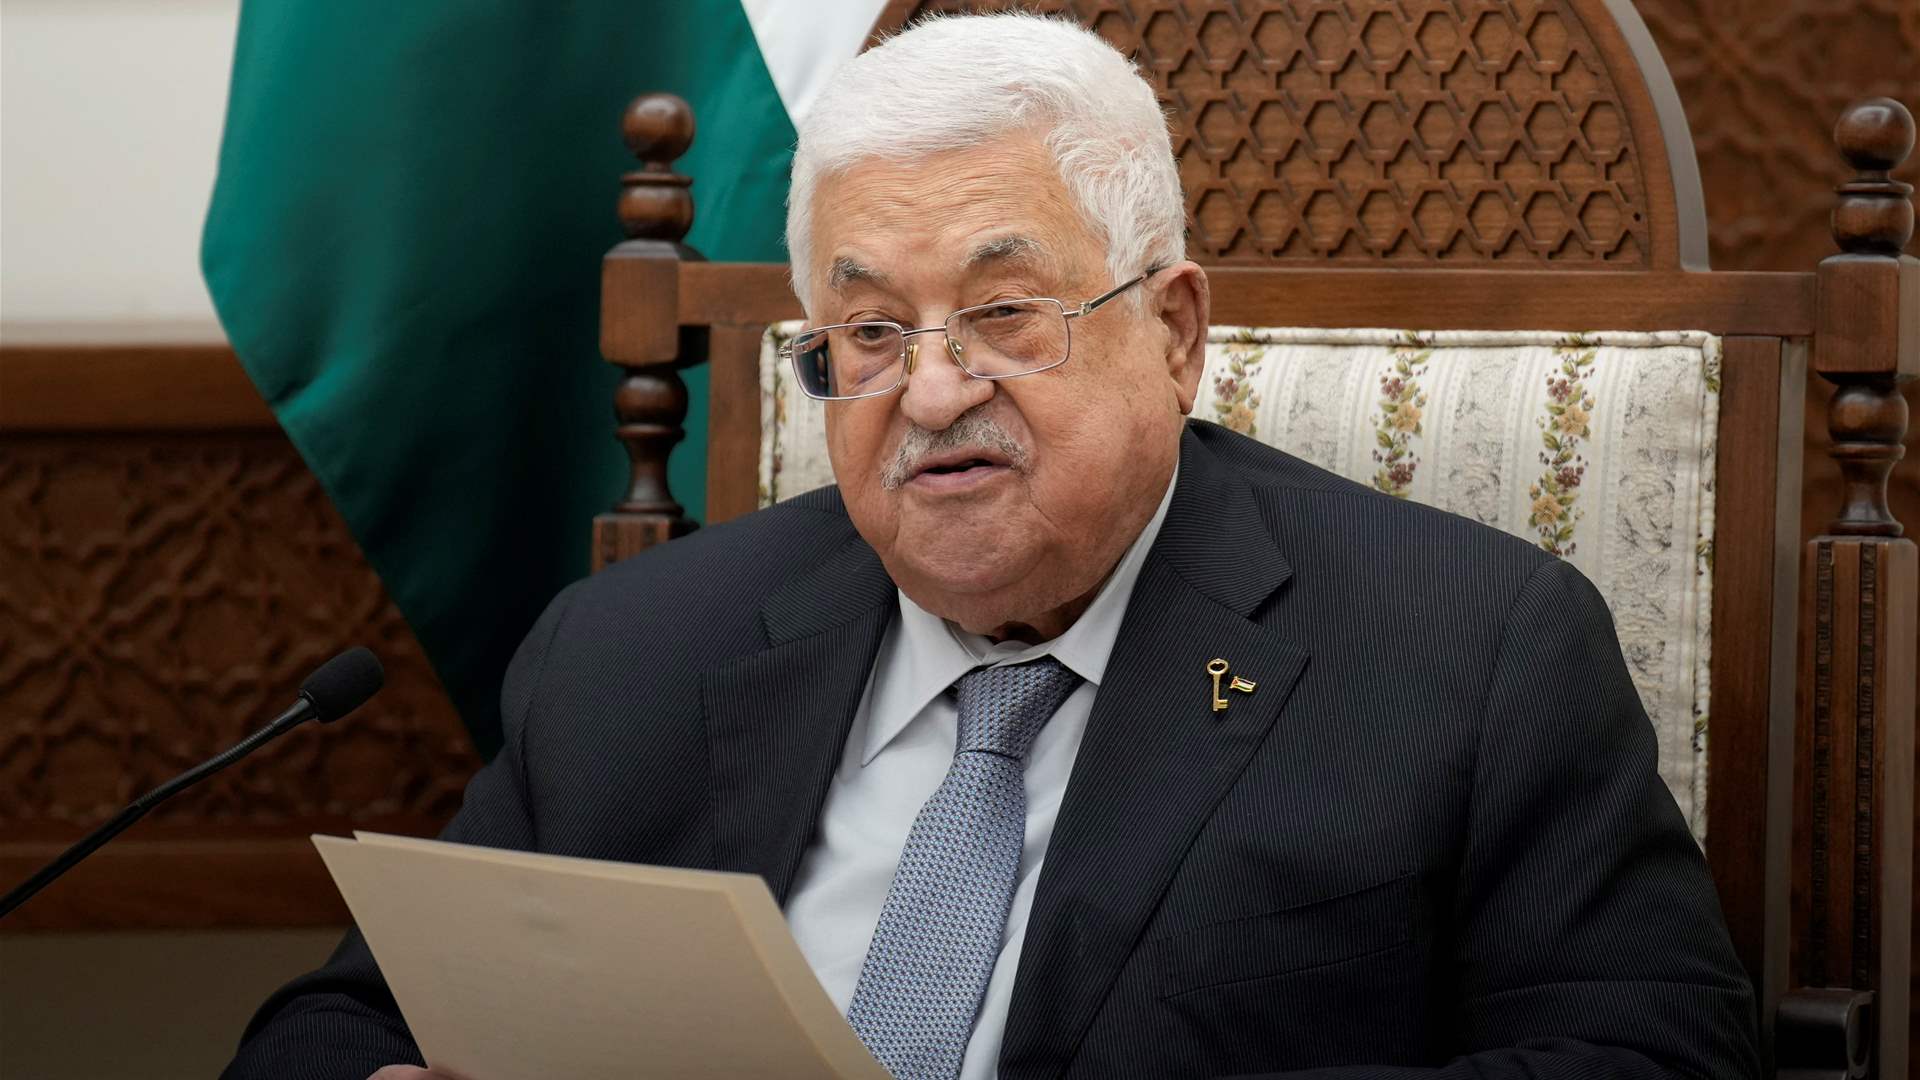 Palestinian president Mahmoud Abbas demands UN, world powers to press Israel to open Gaza crossings